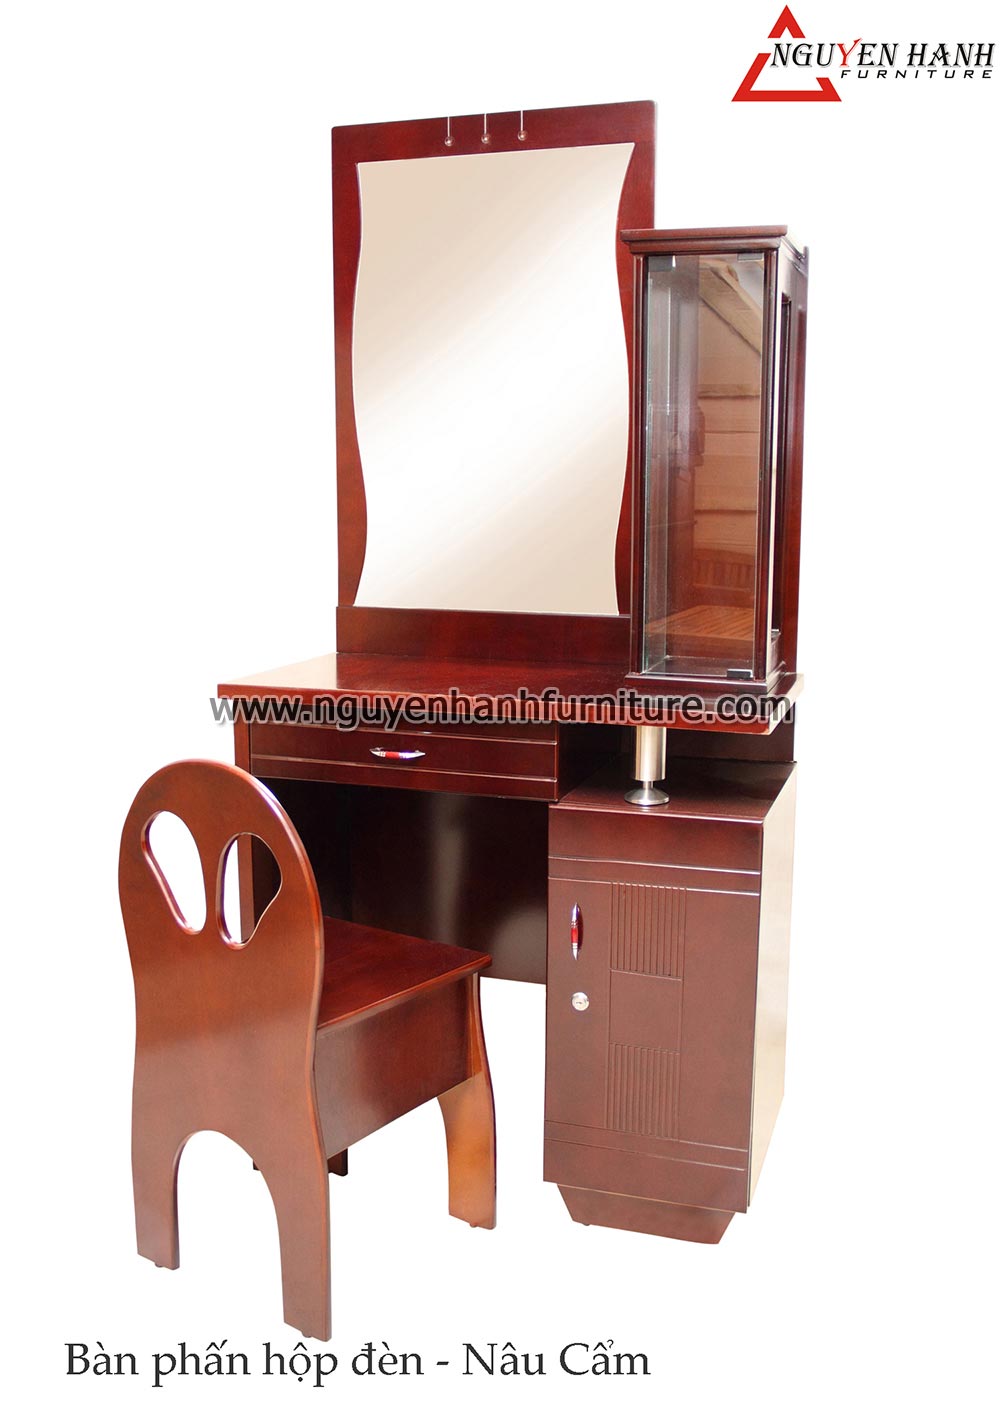 Name product: Brown Light box style Makeup Desk of Rosewood - Dimensions: 80 x 42 x 157 - Description: Veneer bead tree wood